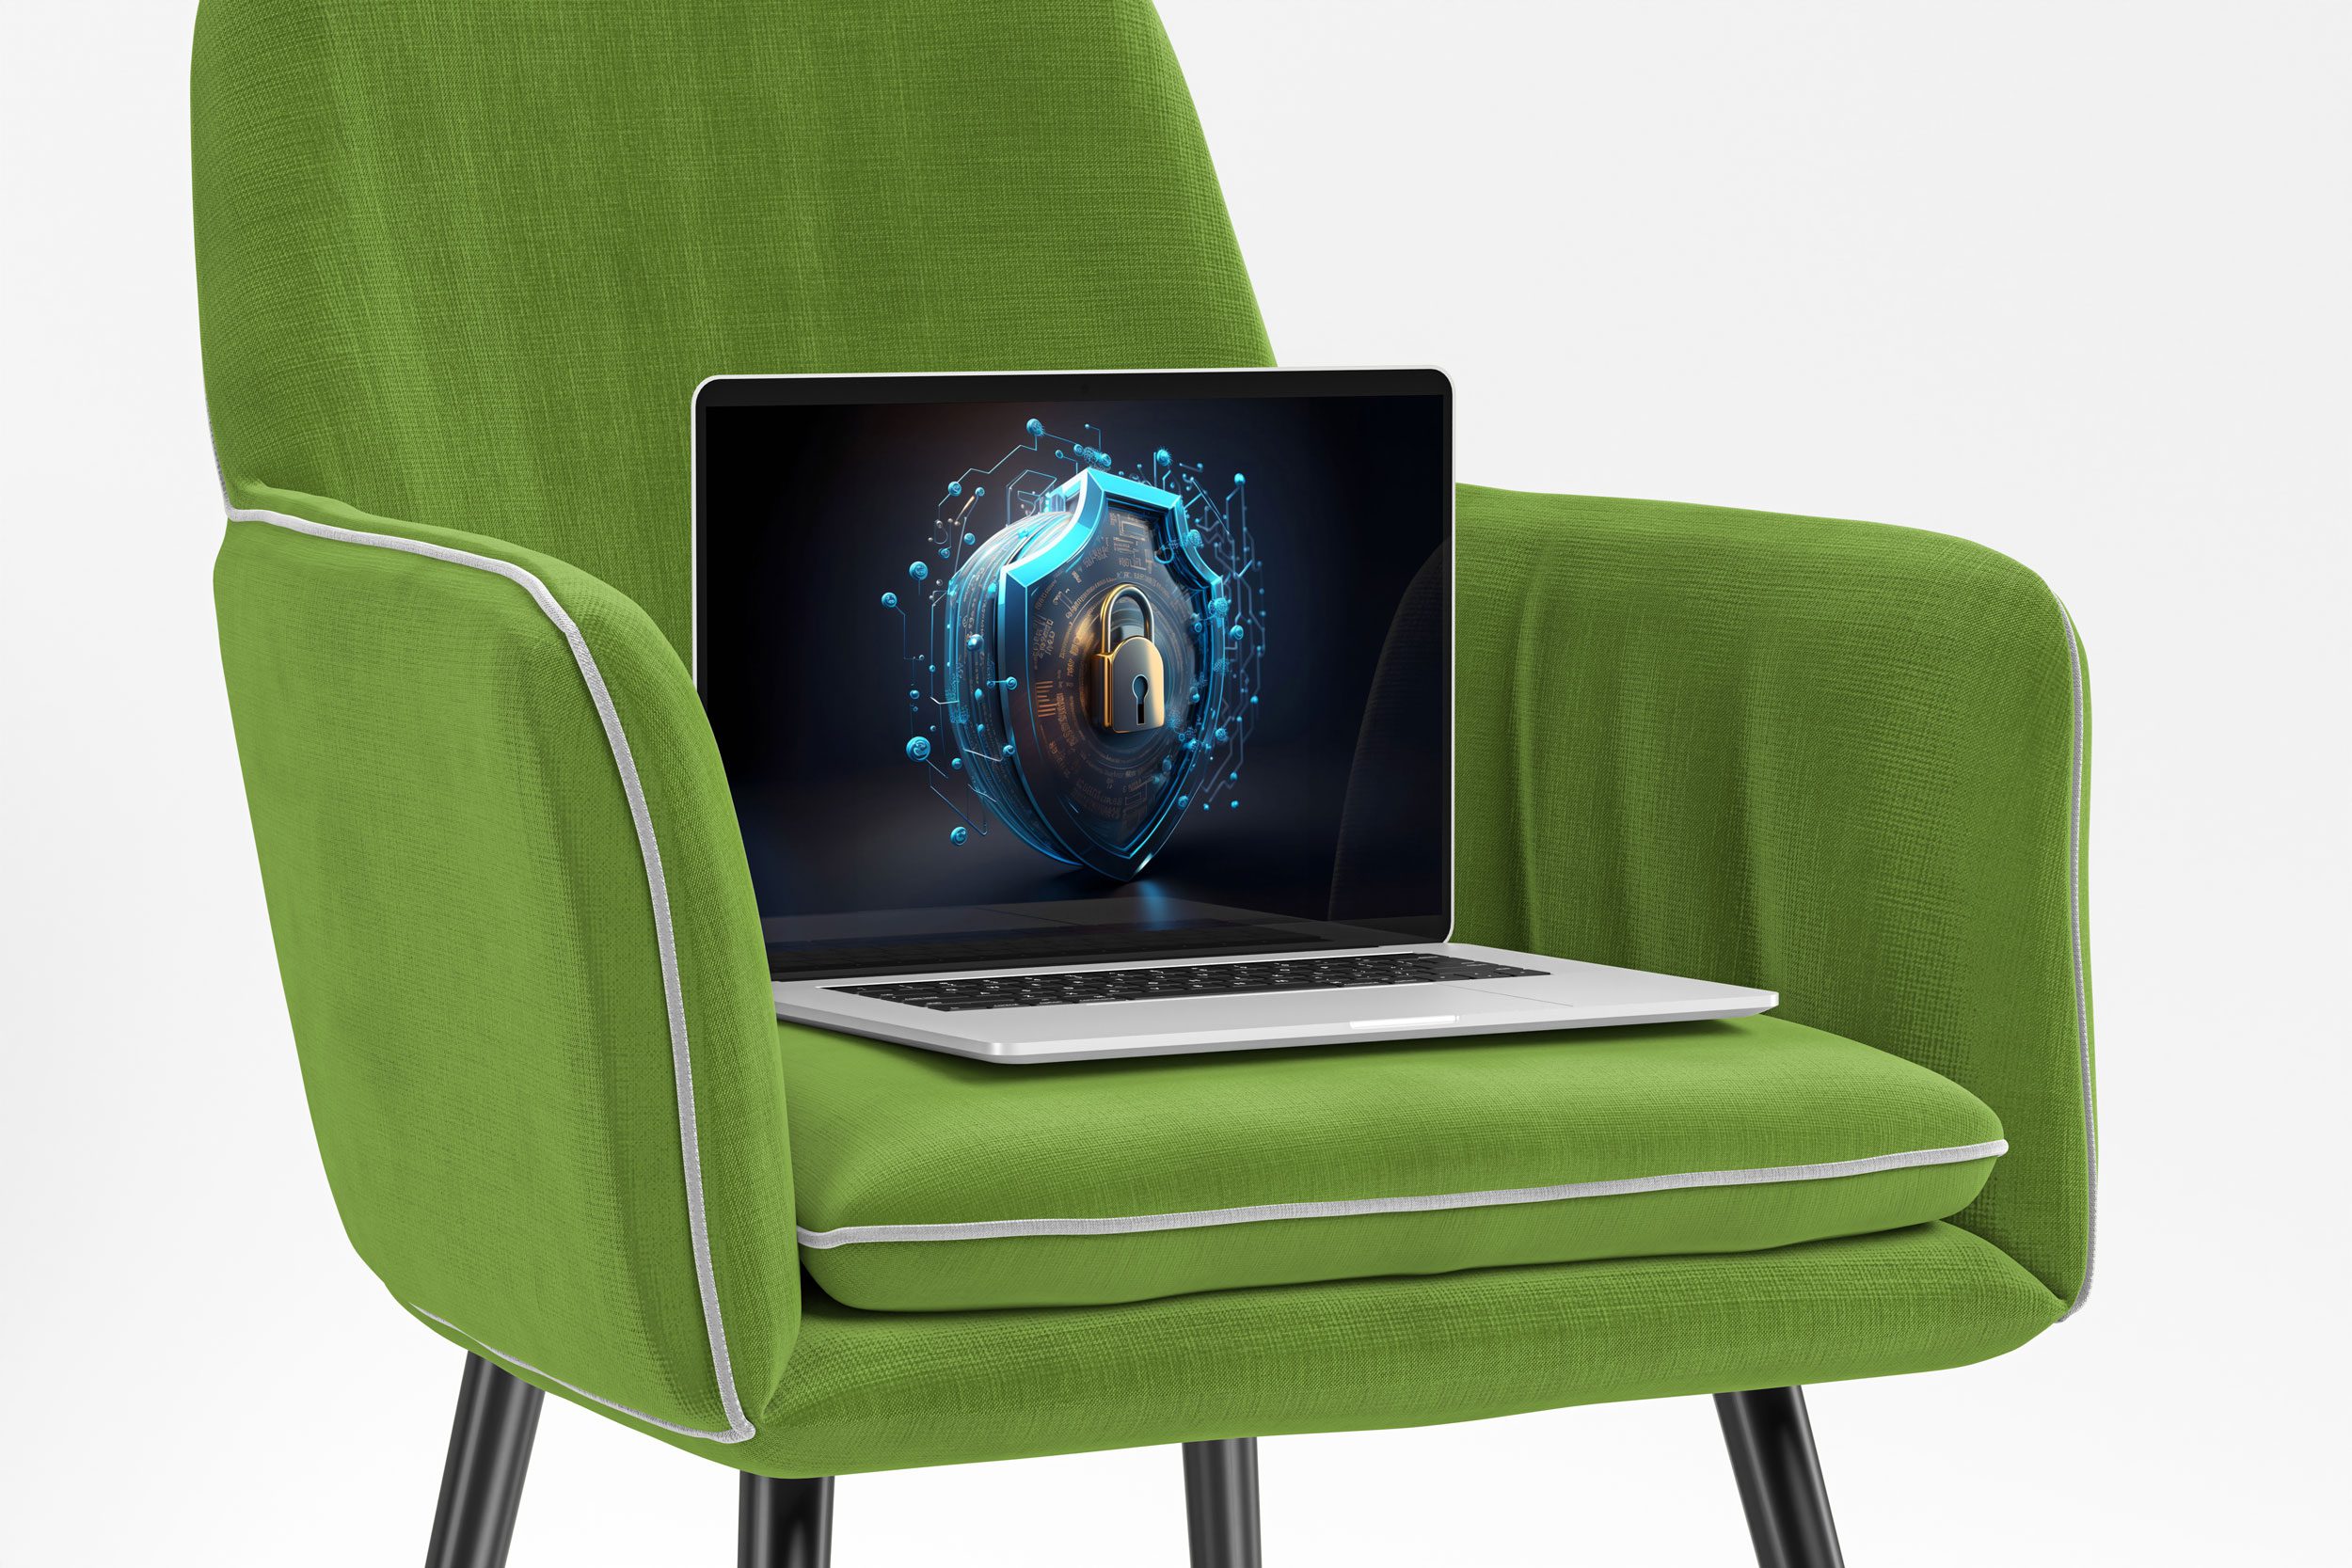 Macbook mit Datenschutzschloss steht aufg einem Grünen Sessel